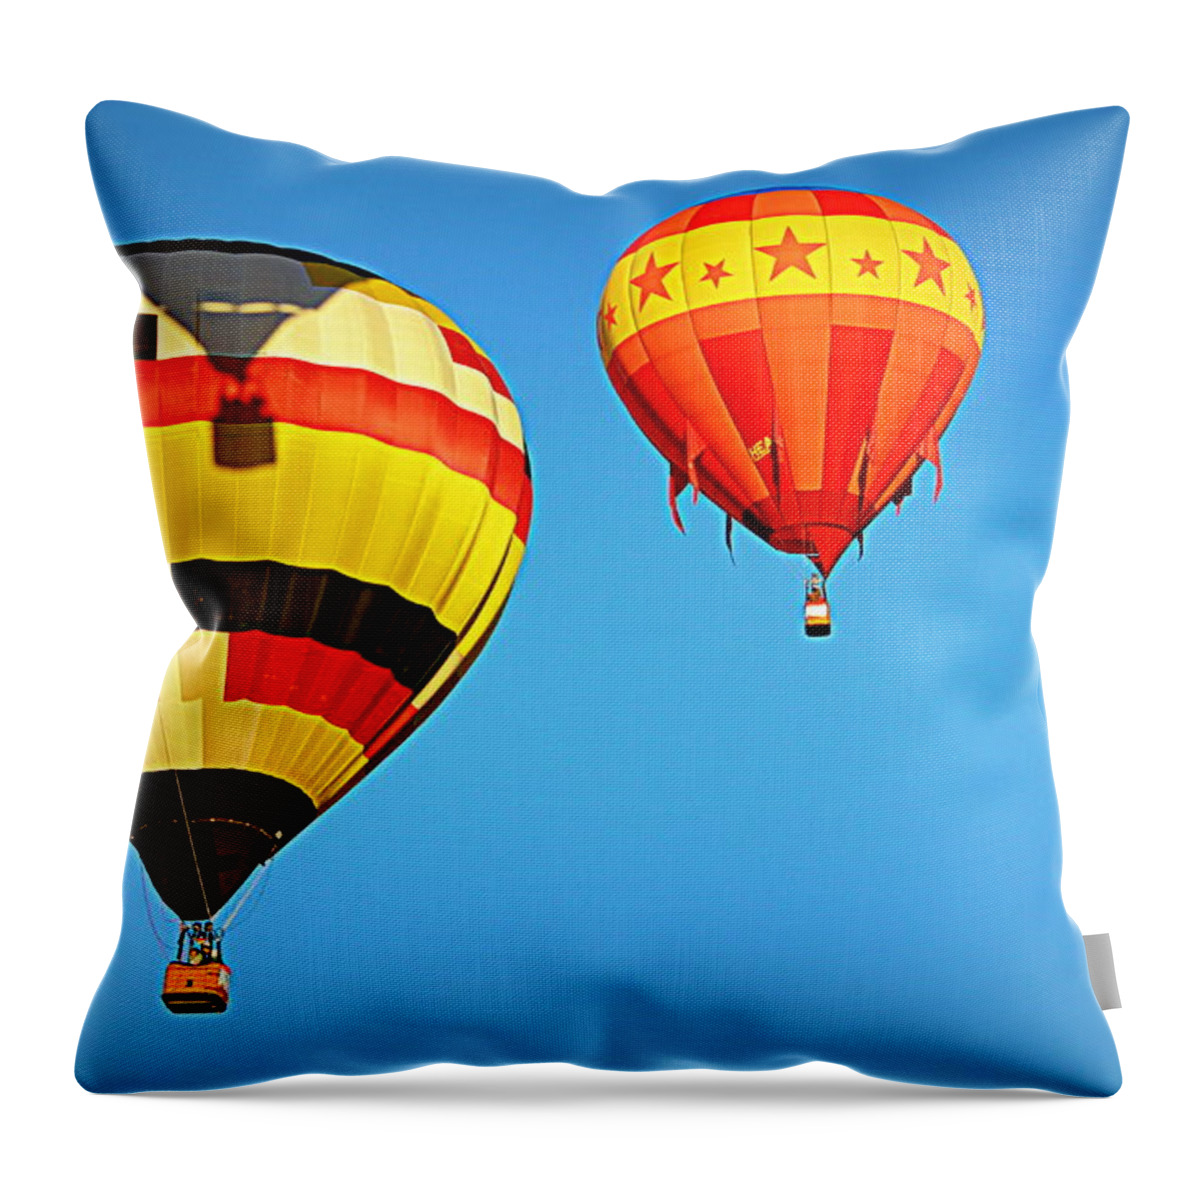 Hot Air Balloon Throw Pillow featuring the photograph In the Shadow by AJ Schibig